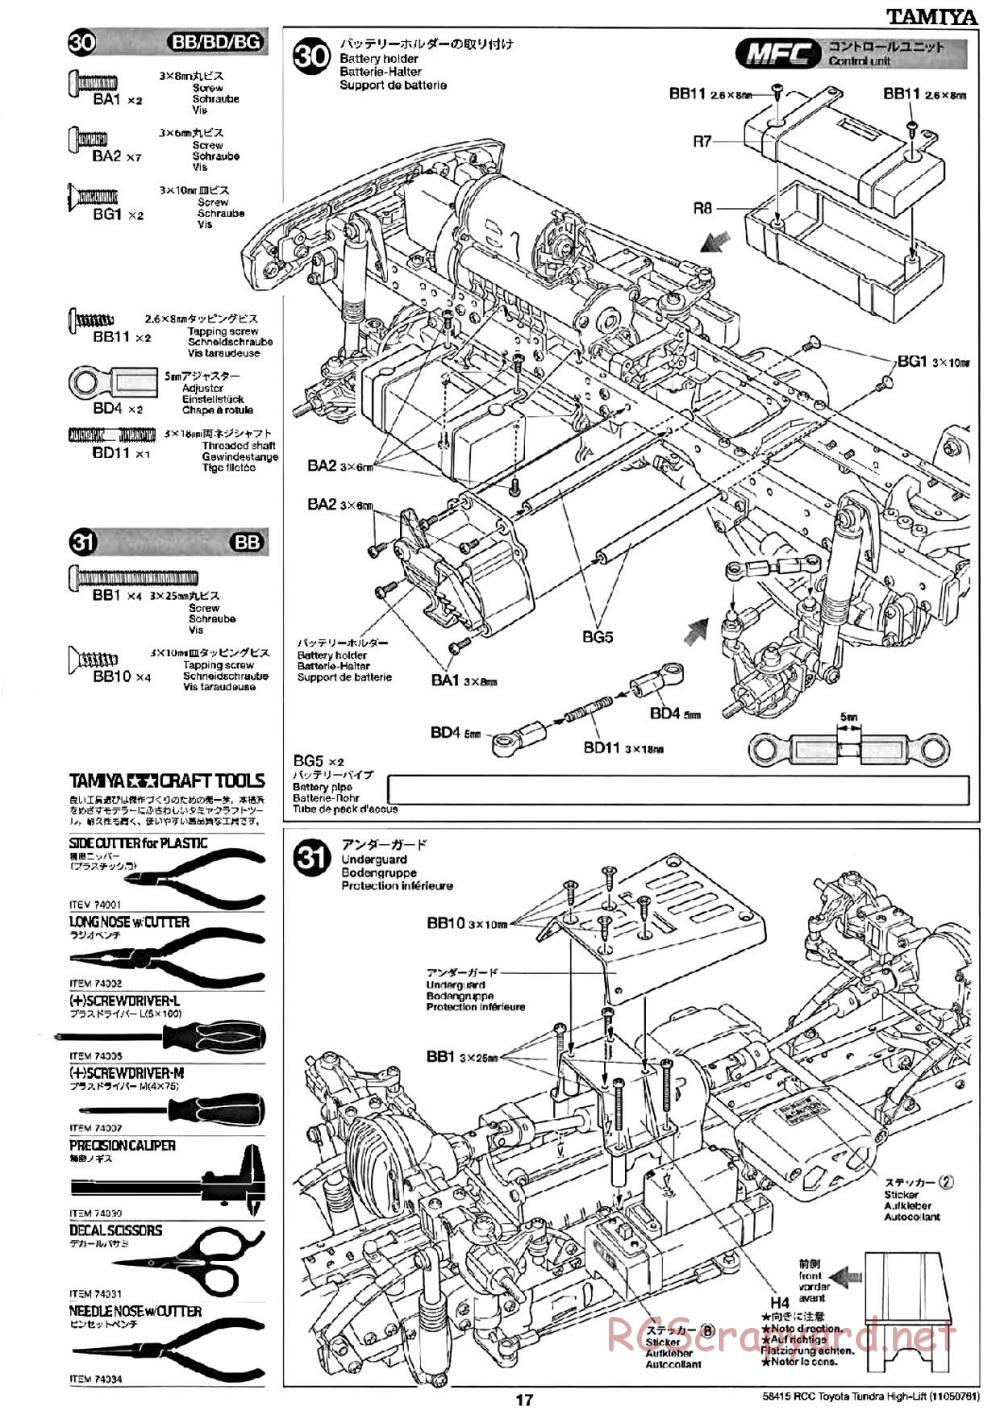 Tamiya - Toyota Tundra High-Lift Chassis - Manual - Page 17